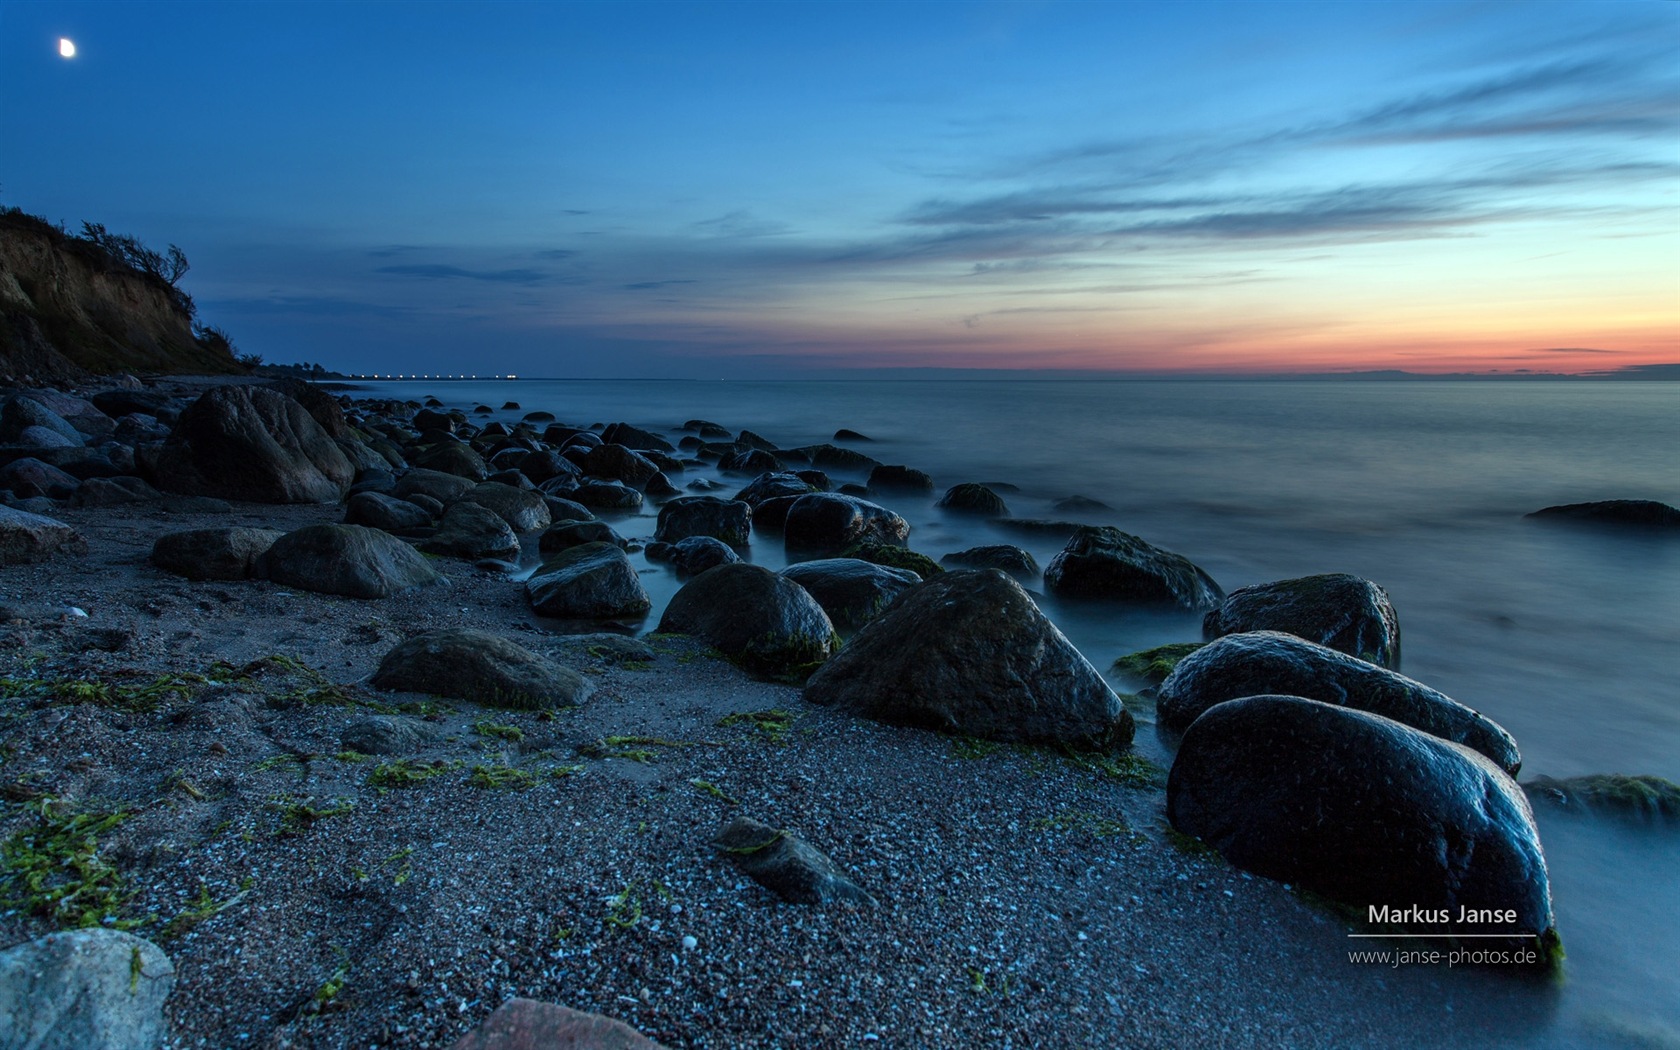 Beautiful coastal scenery in Germany, Windows 8 HD wallpapers #8 - 1680x1050